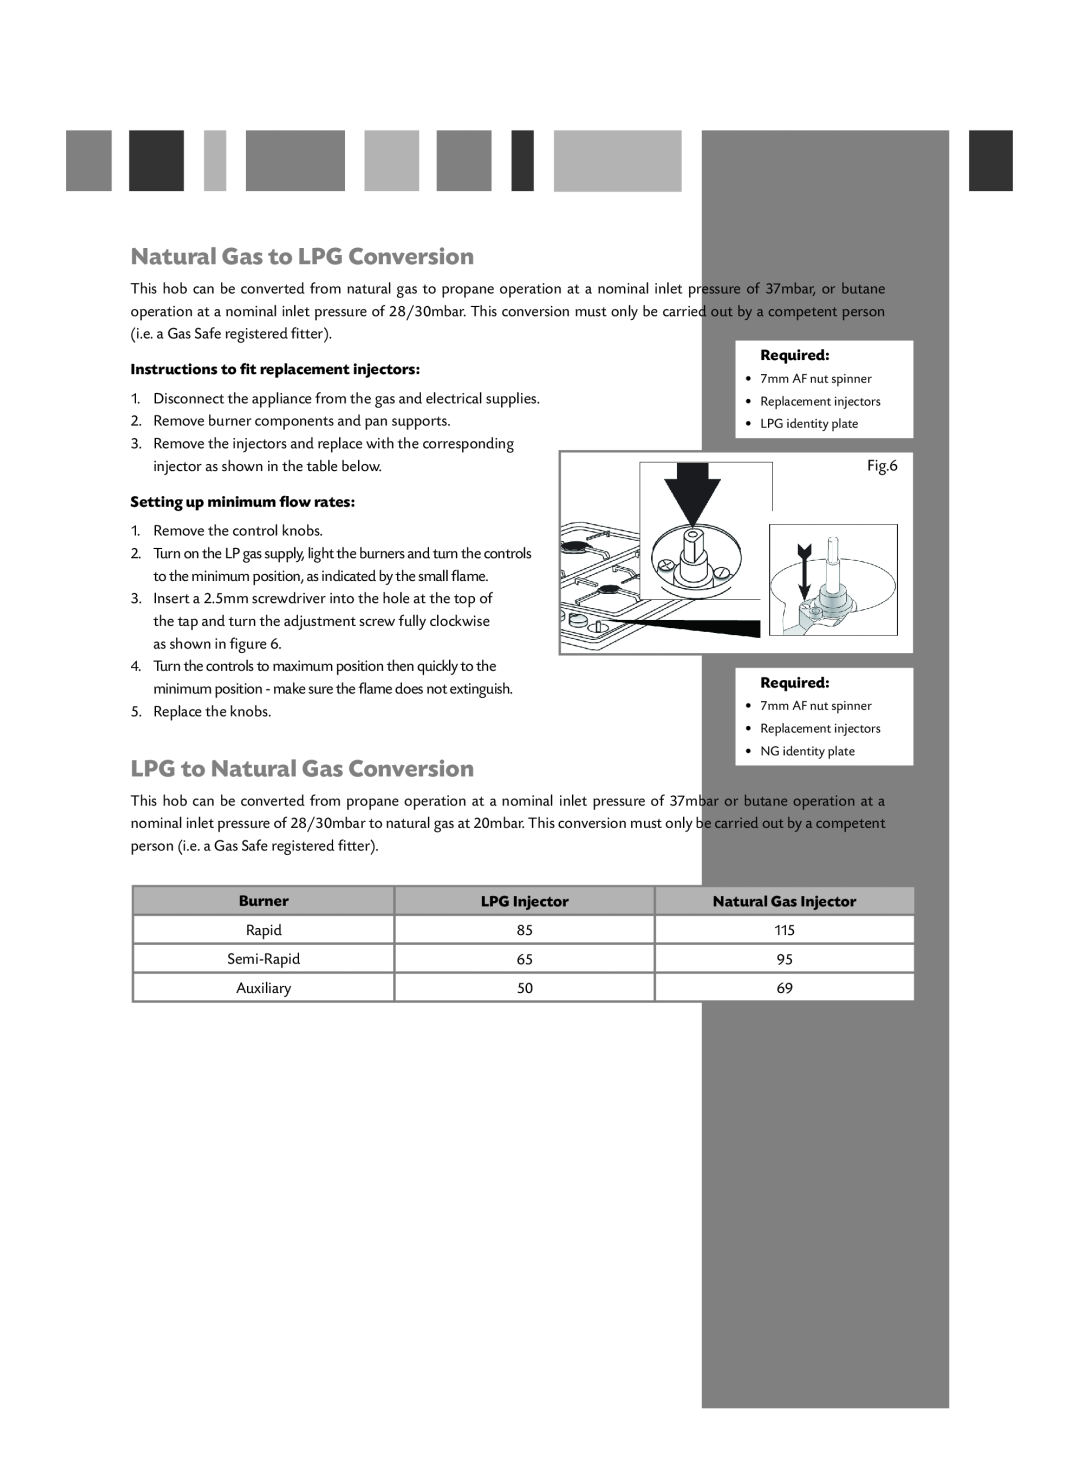 CDA HCG501 Natural Gas to LPG Conversion, LPG to Natural Gas Conversion, Instructions to fit replacement injectors, Burner 